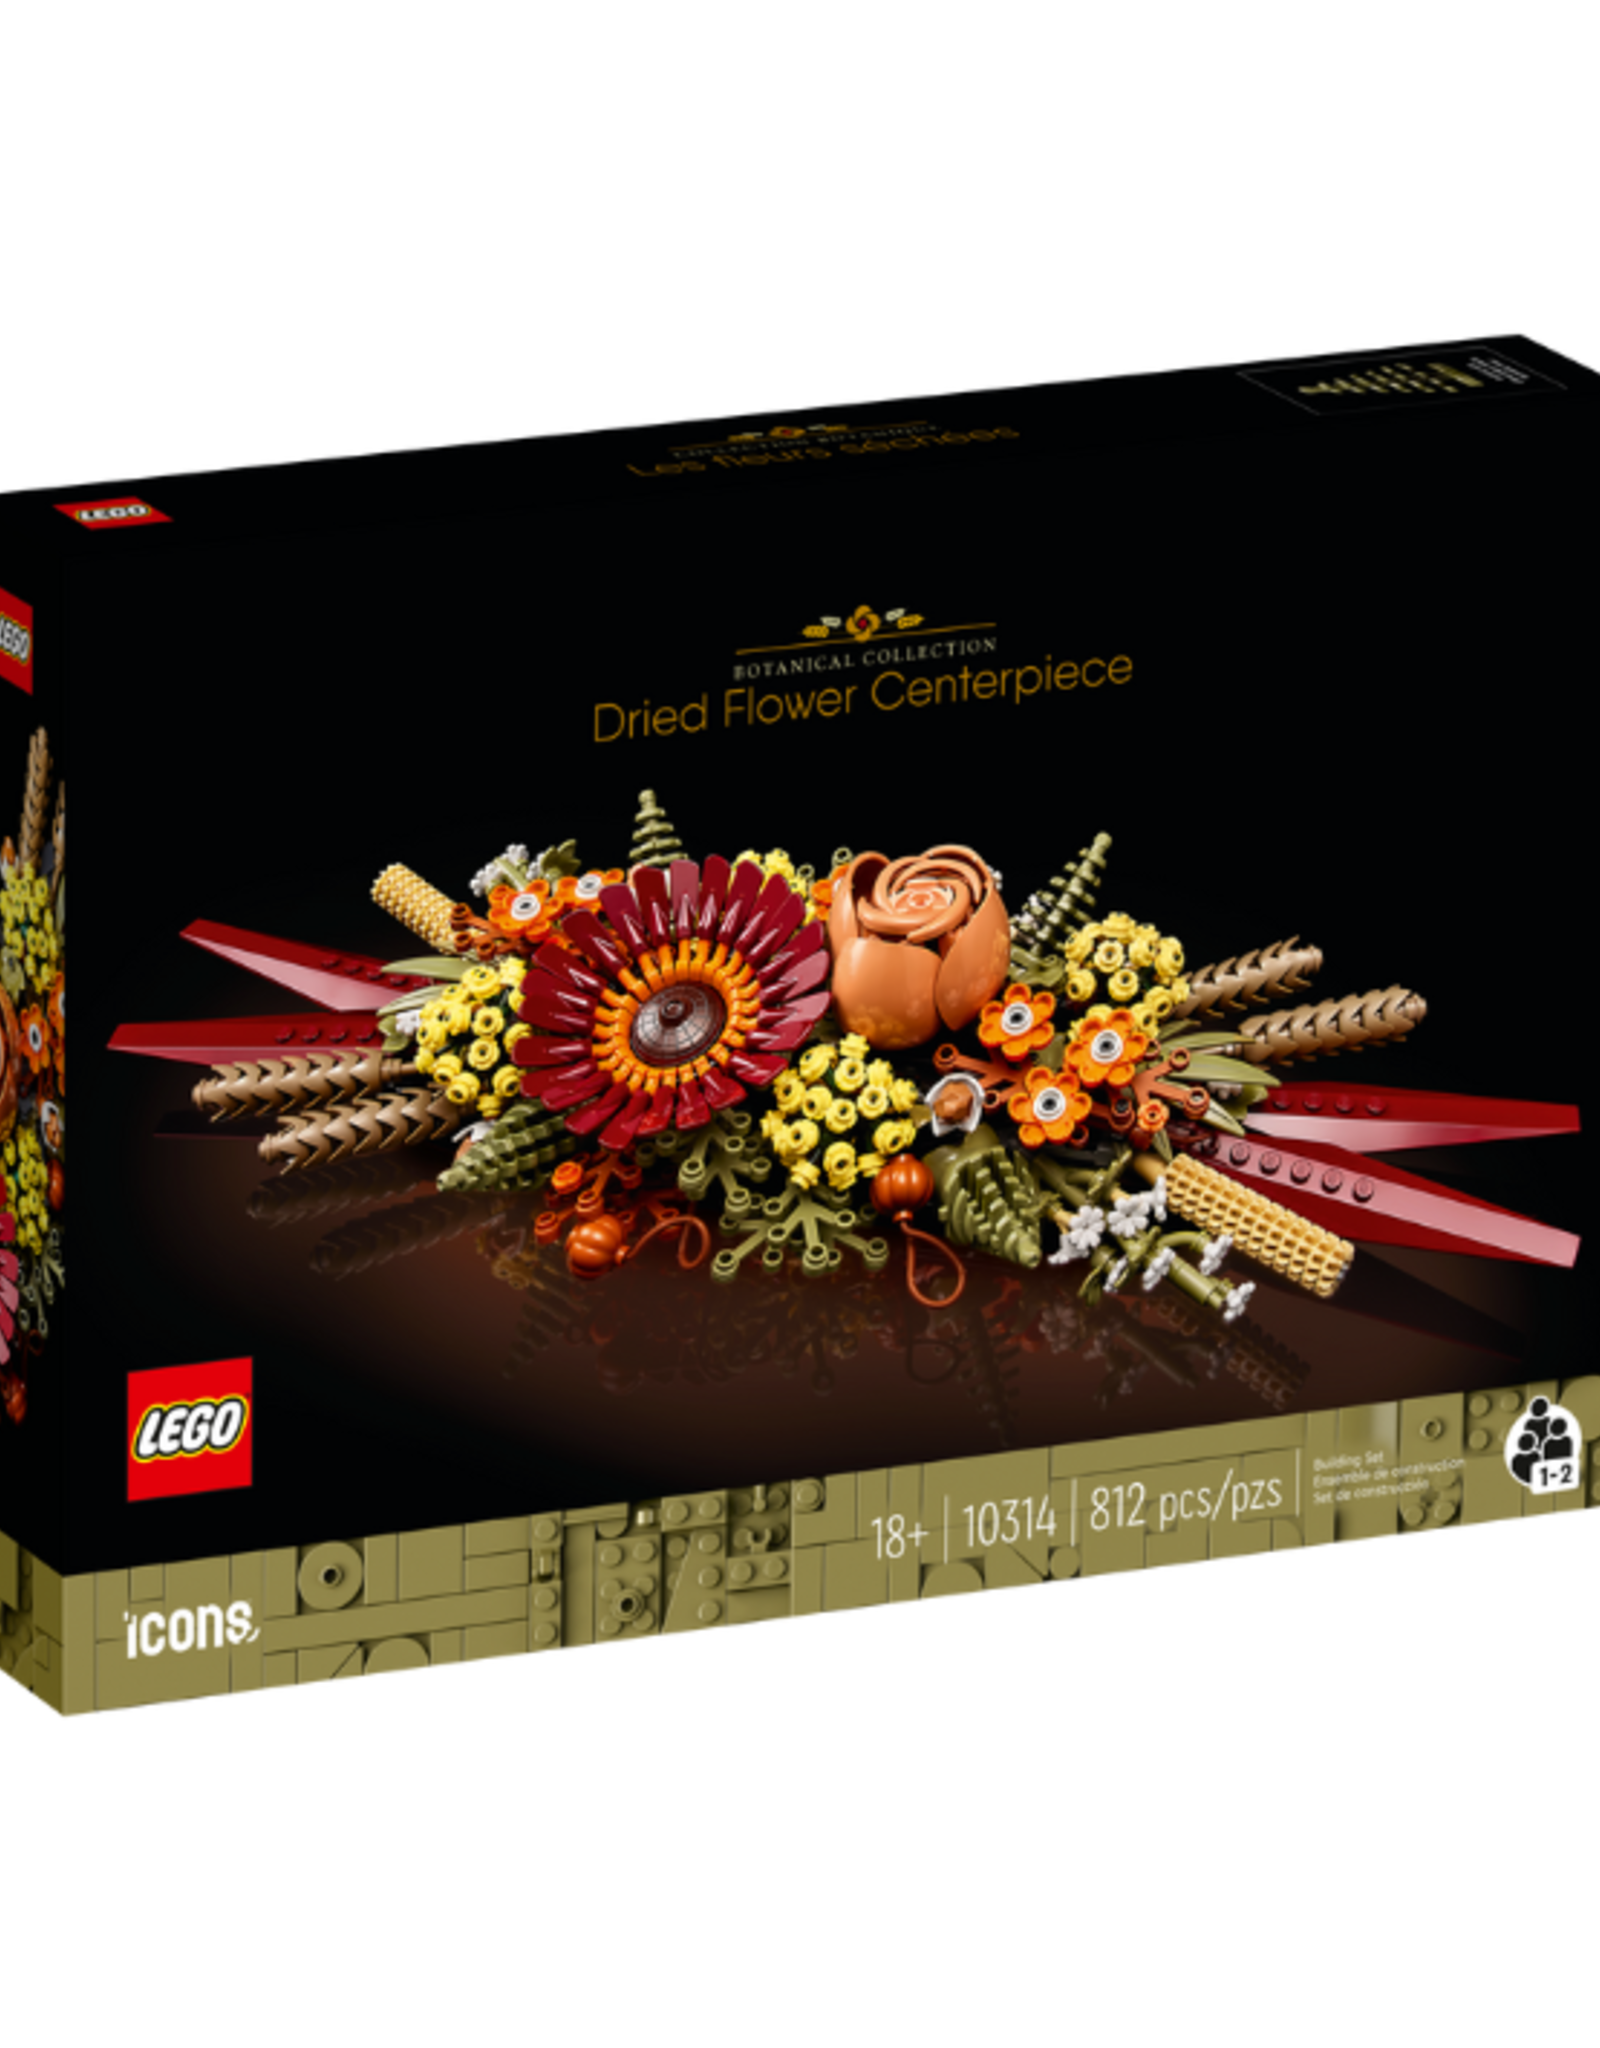 Lego Lego - Icons - 10314 - Dried Flower Centerpiece